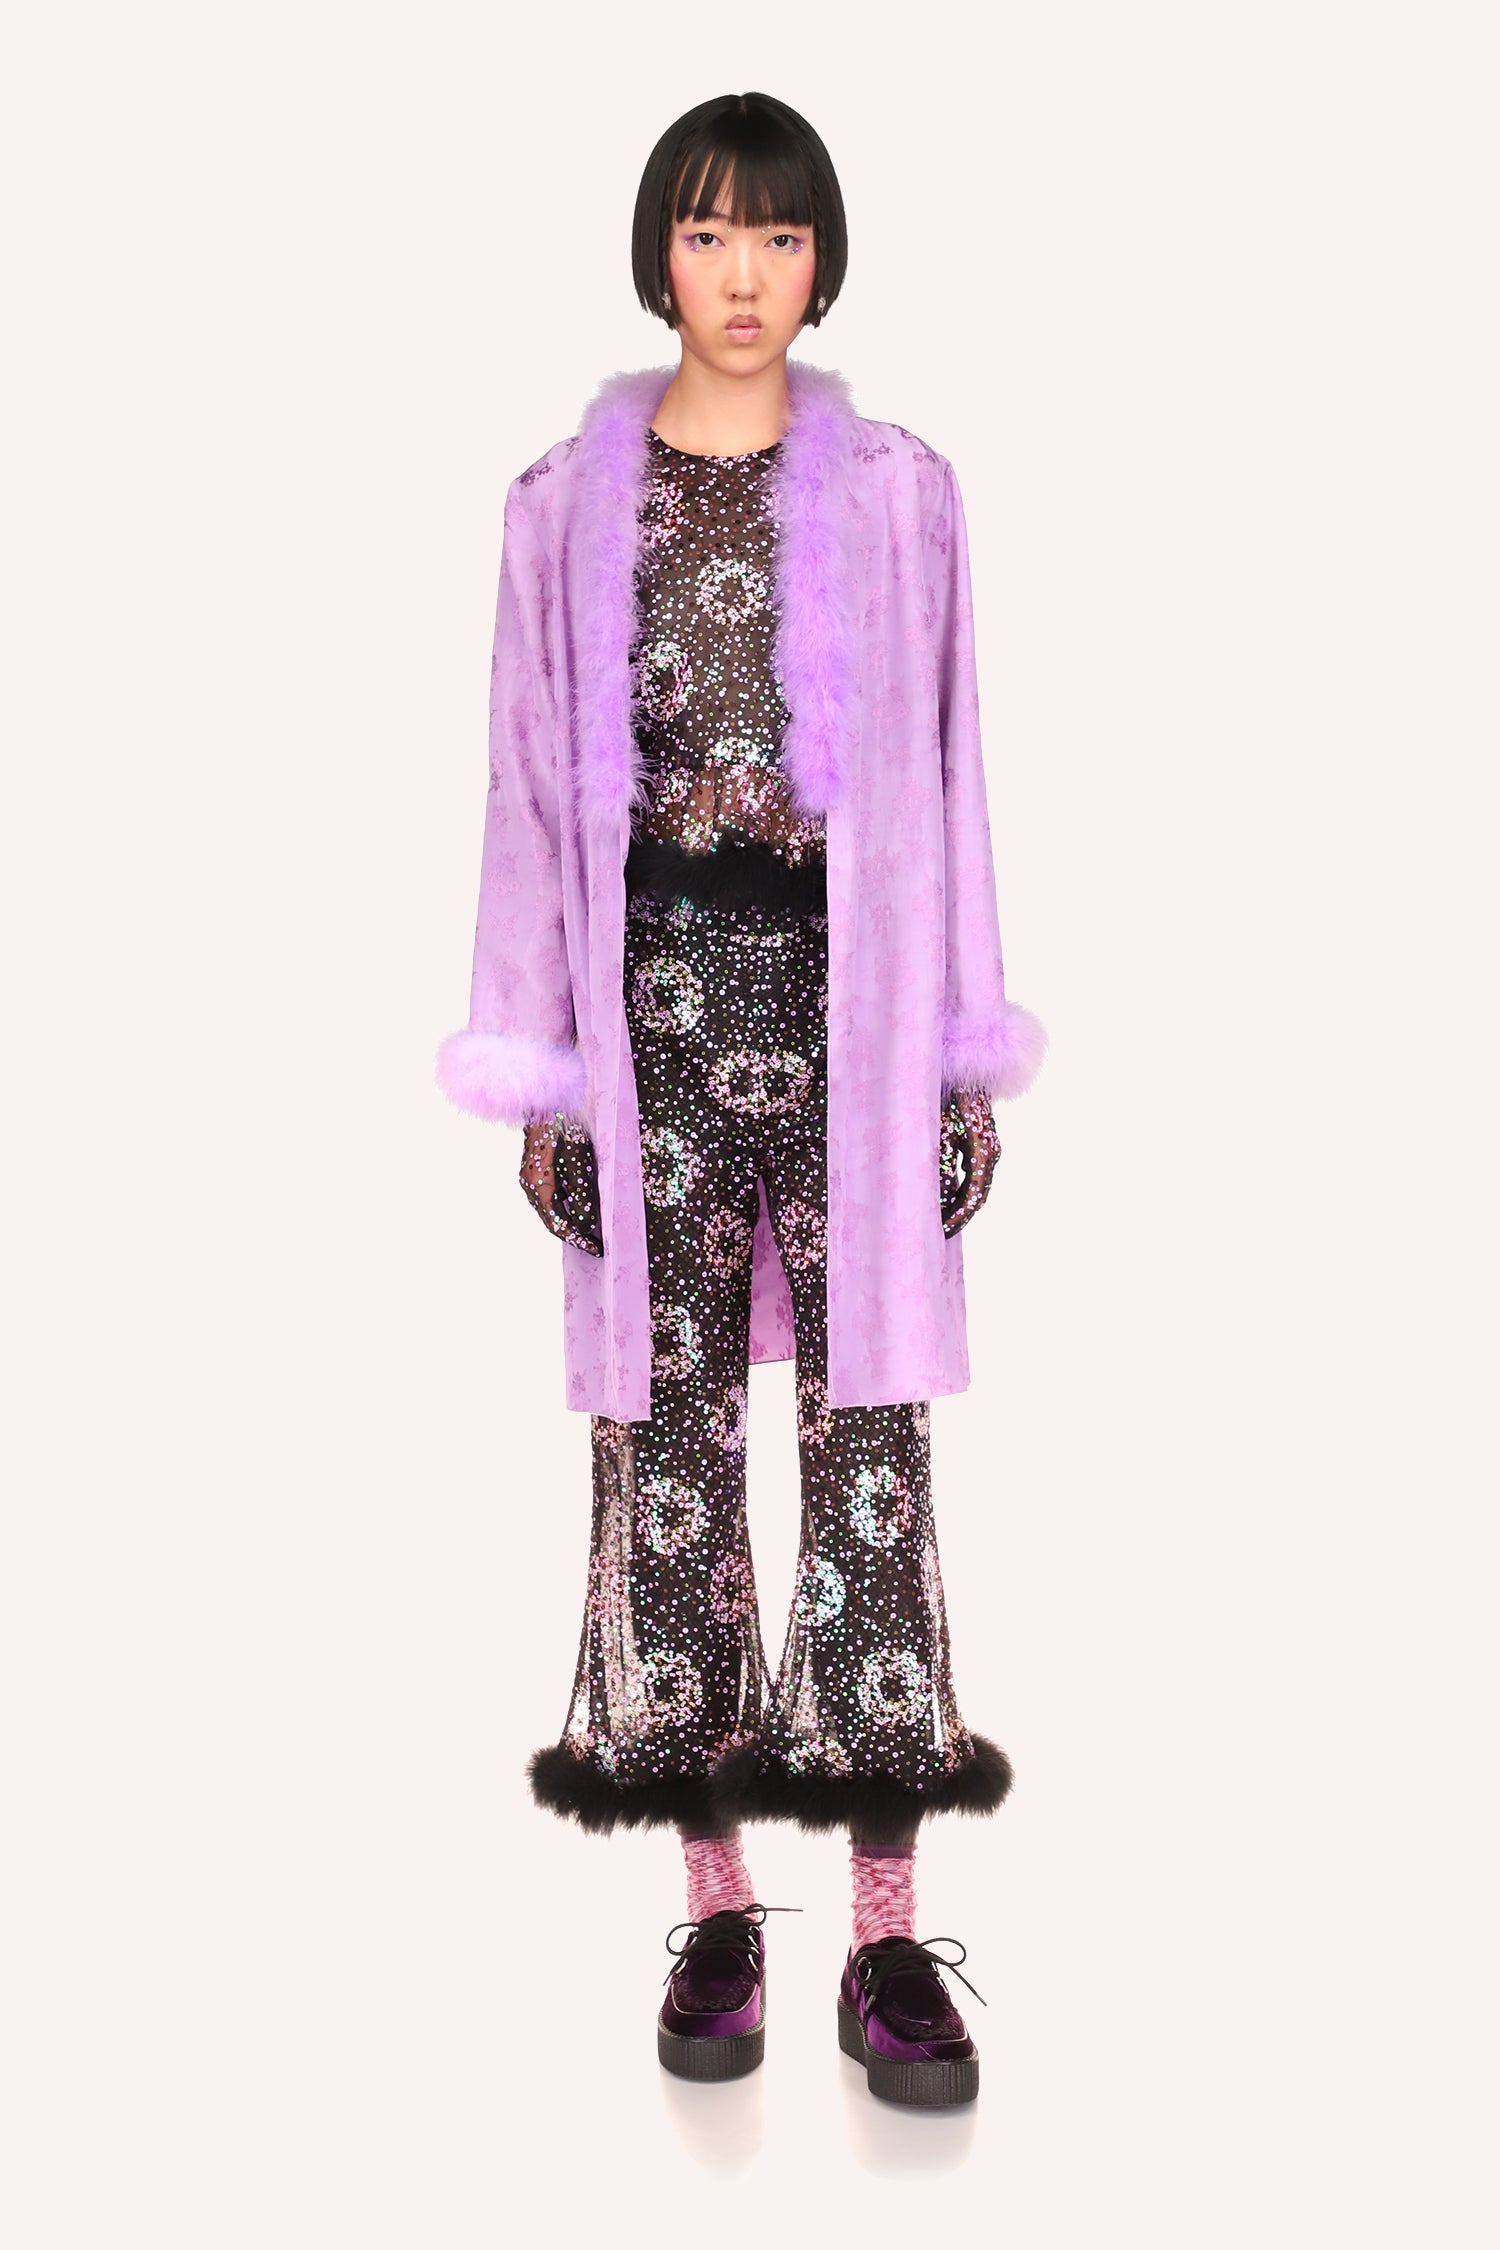 Floral Jacquard Robe, Knee long lavender robe, long sleeves with fluffy hem, fluffy hem at collar down